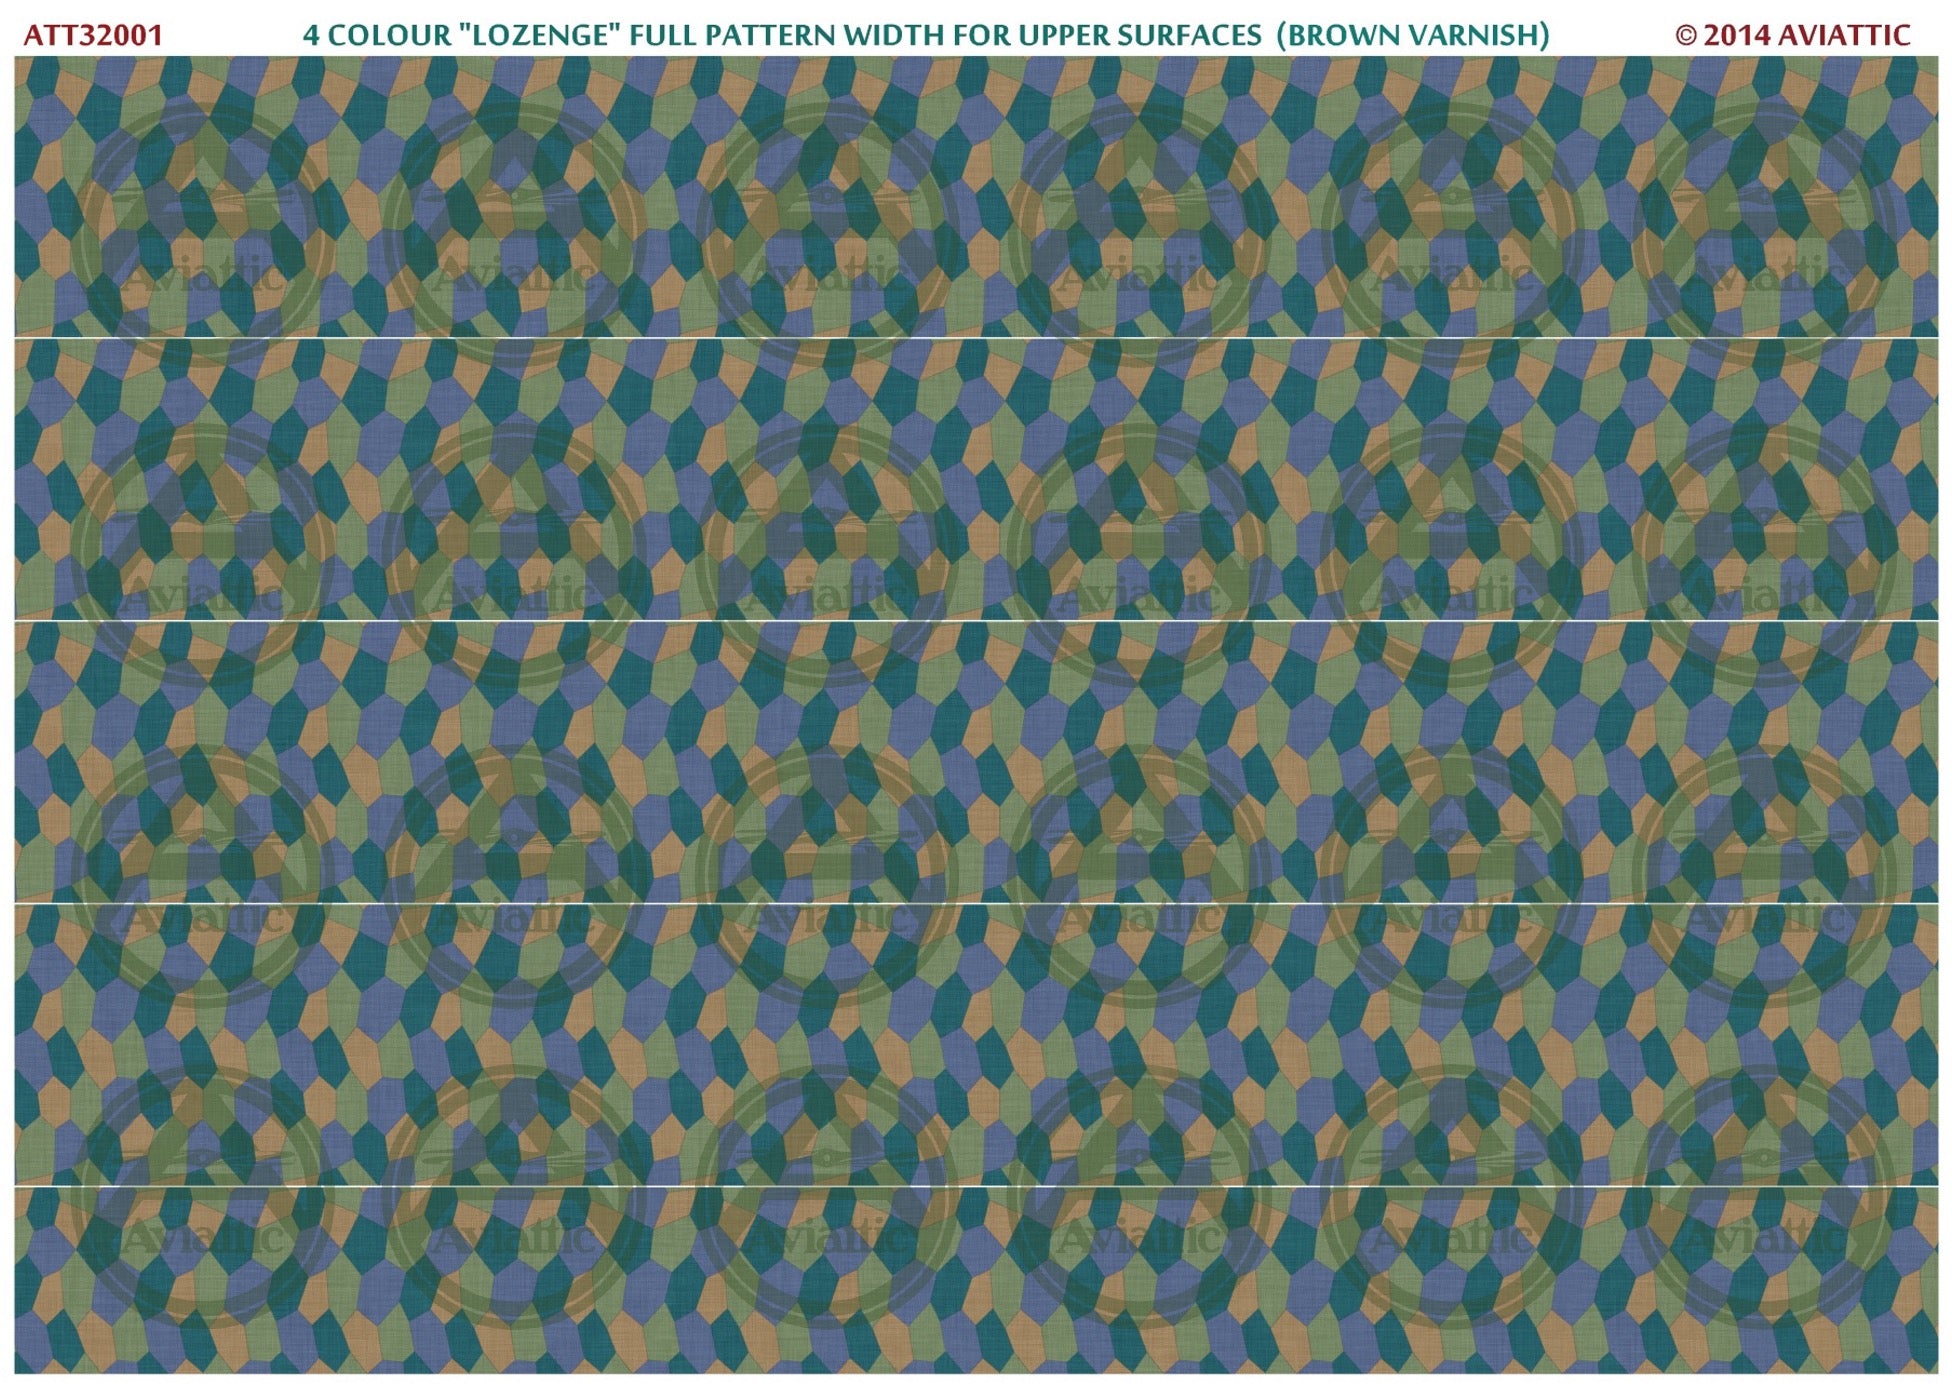 1/32 - 4 colour lozenge - full pattern - upper surfaces - brown varnish